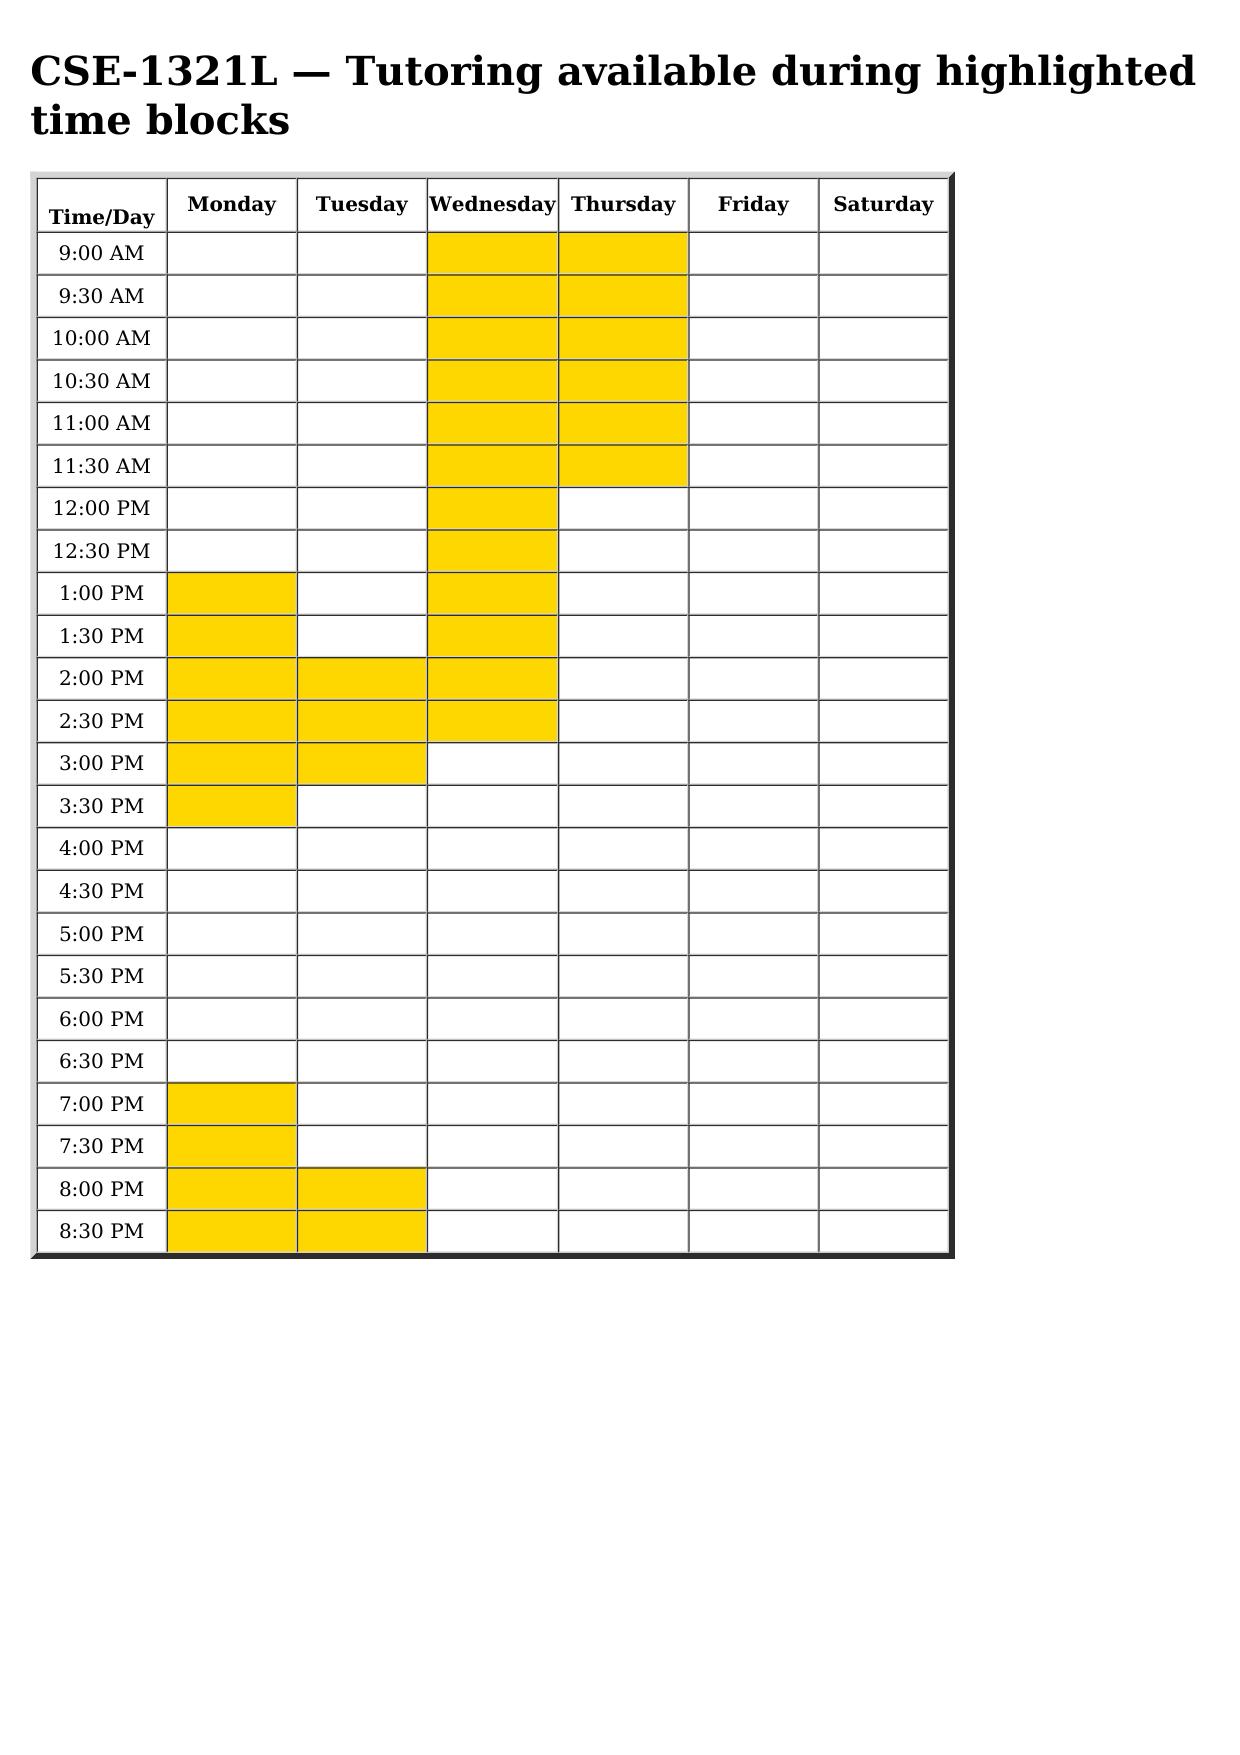 cse 1321l schedule